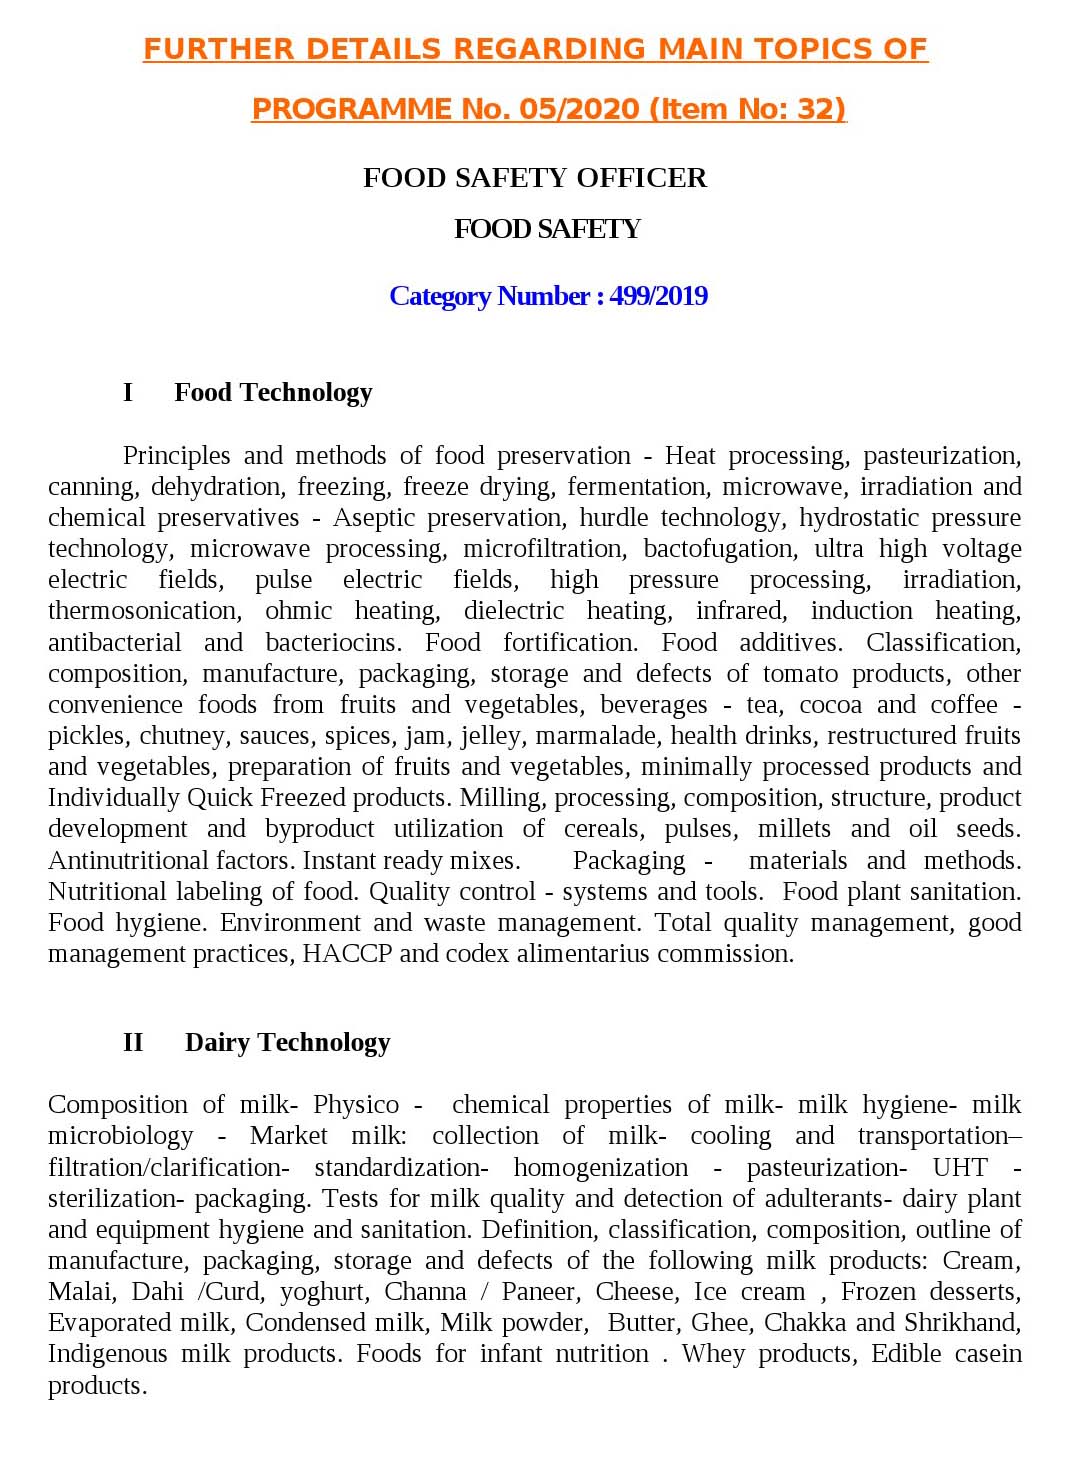 Kerala PSC Food Safety Officer Exam Syllabus May 2020 - Notification Image 1